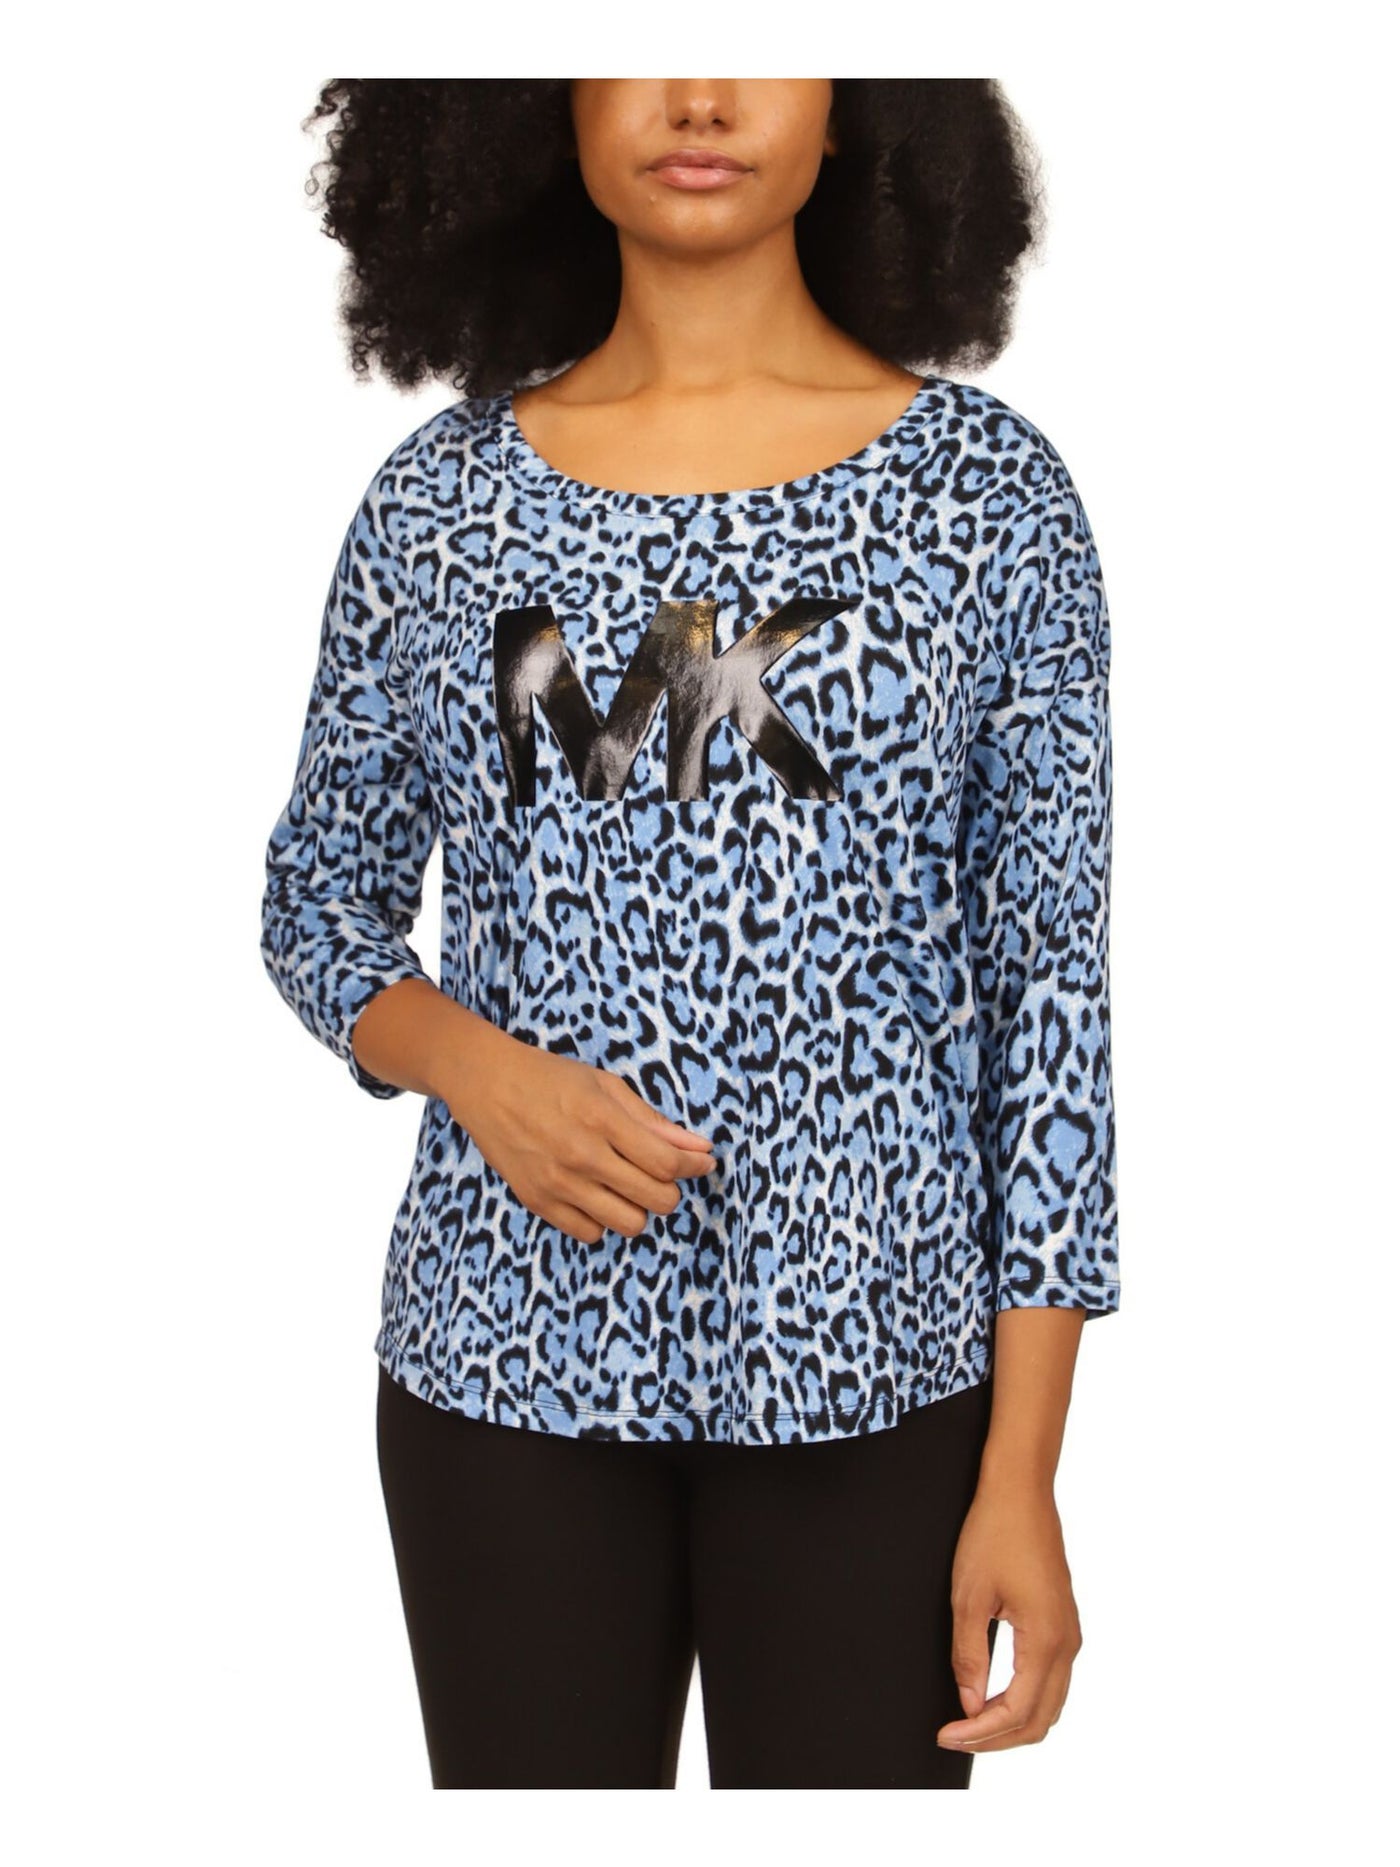 MICHAEL KORS Womens Blue Animal Print 3/4 Sleeve Scoop Neck T-Shirt S